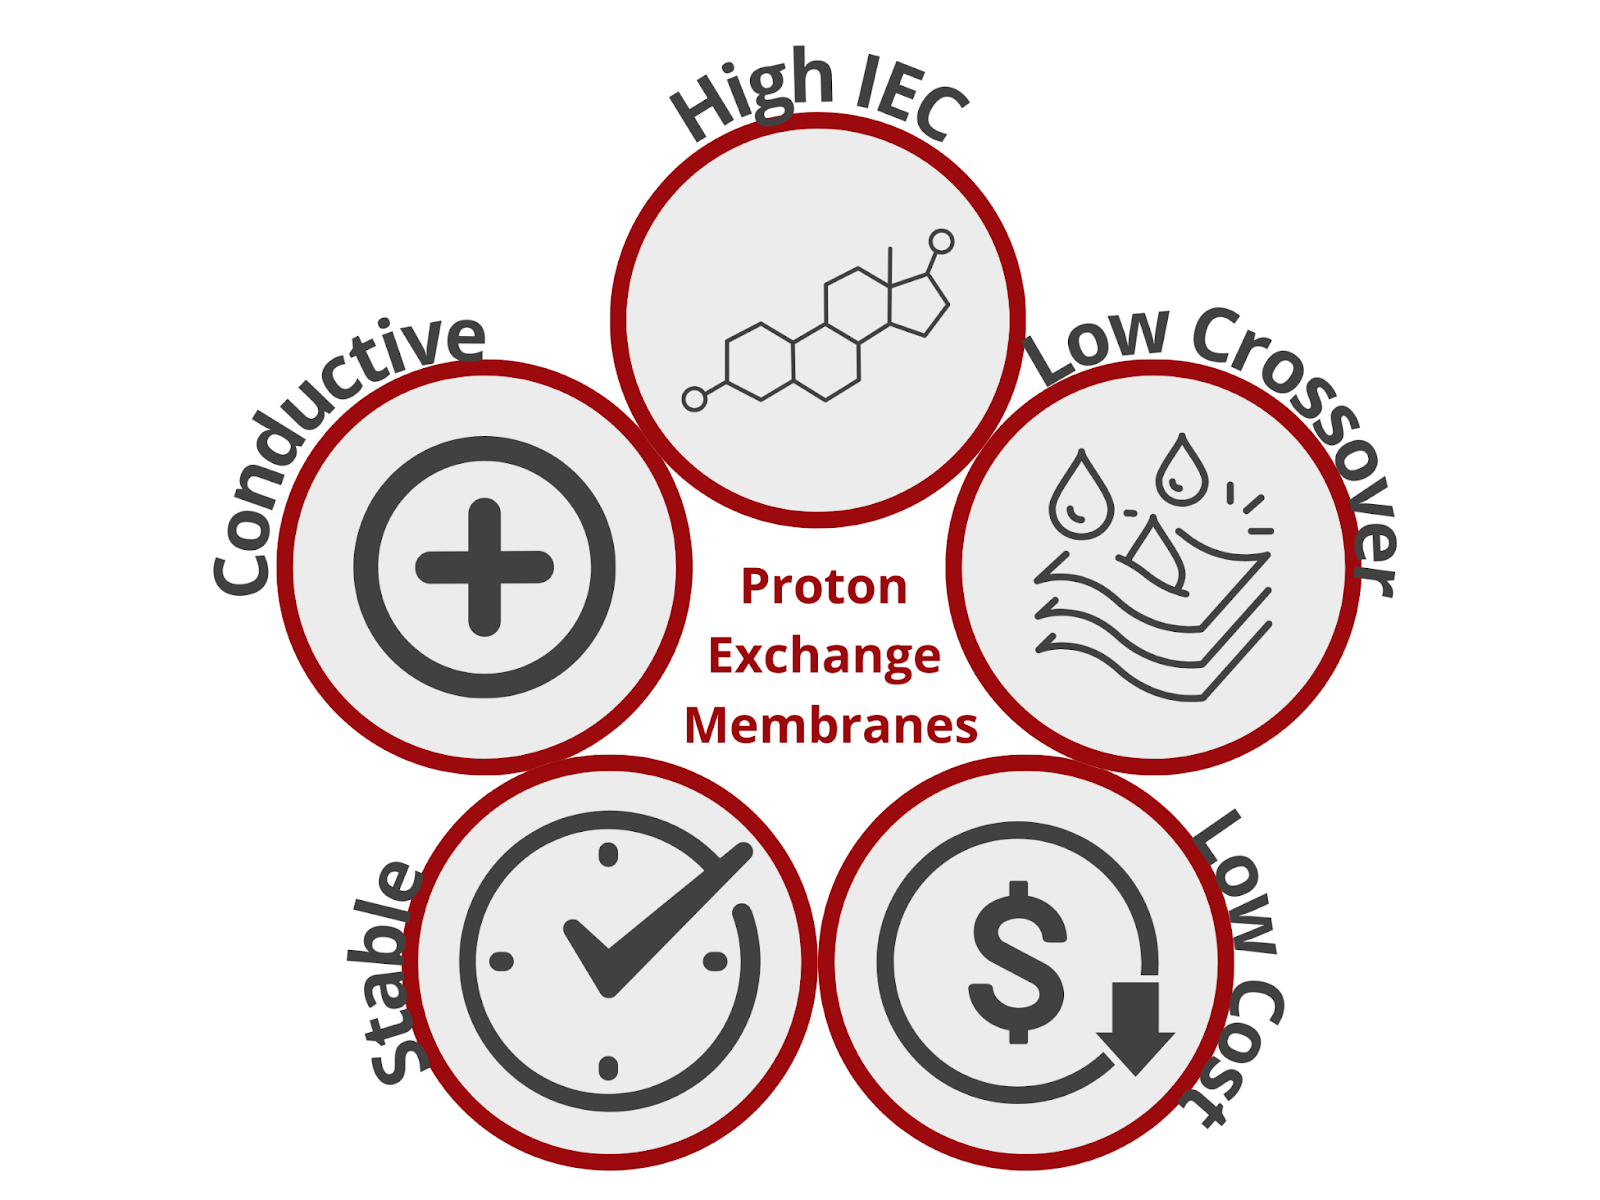 Key Properties of Proton Exchange Membranes